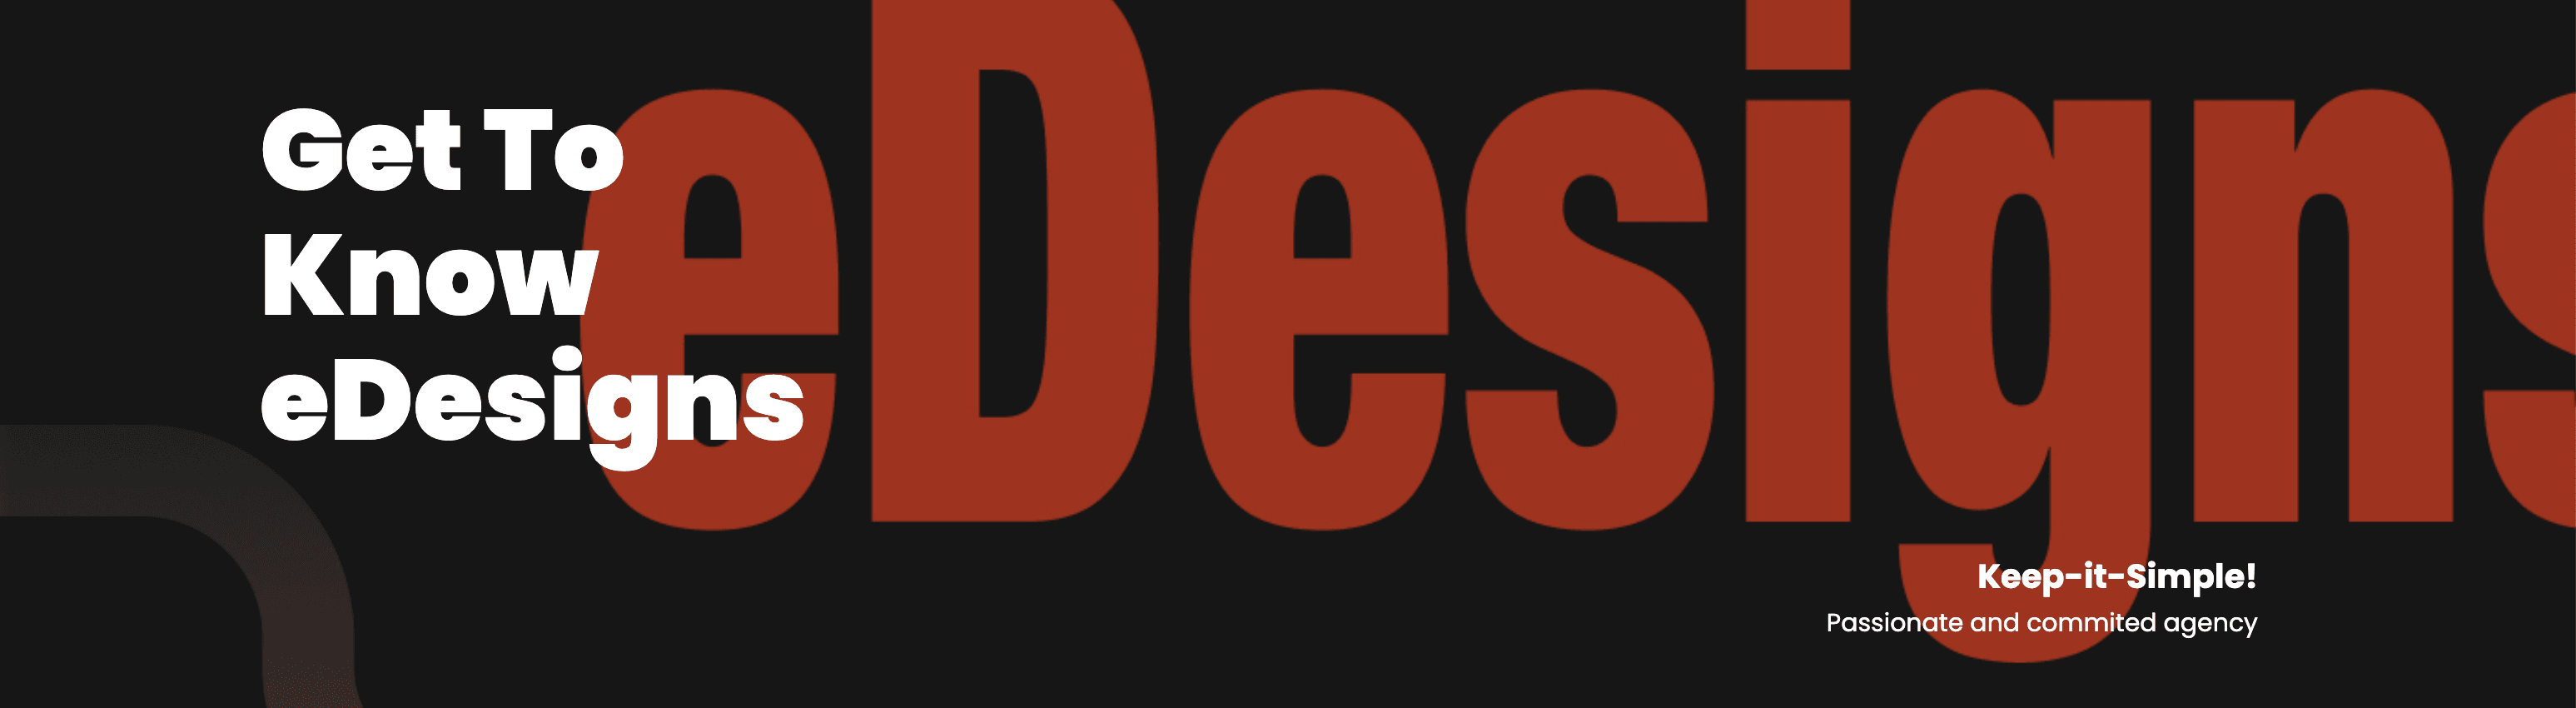 eDesigns banner